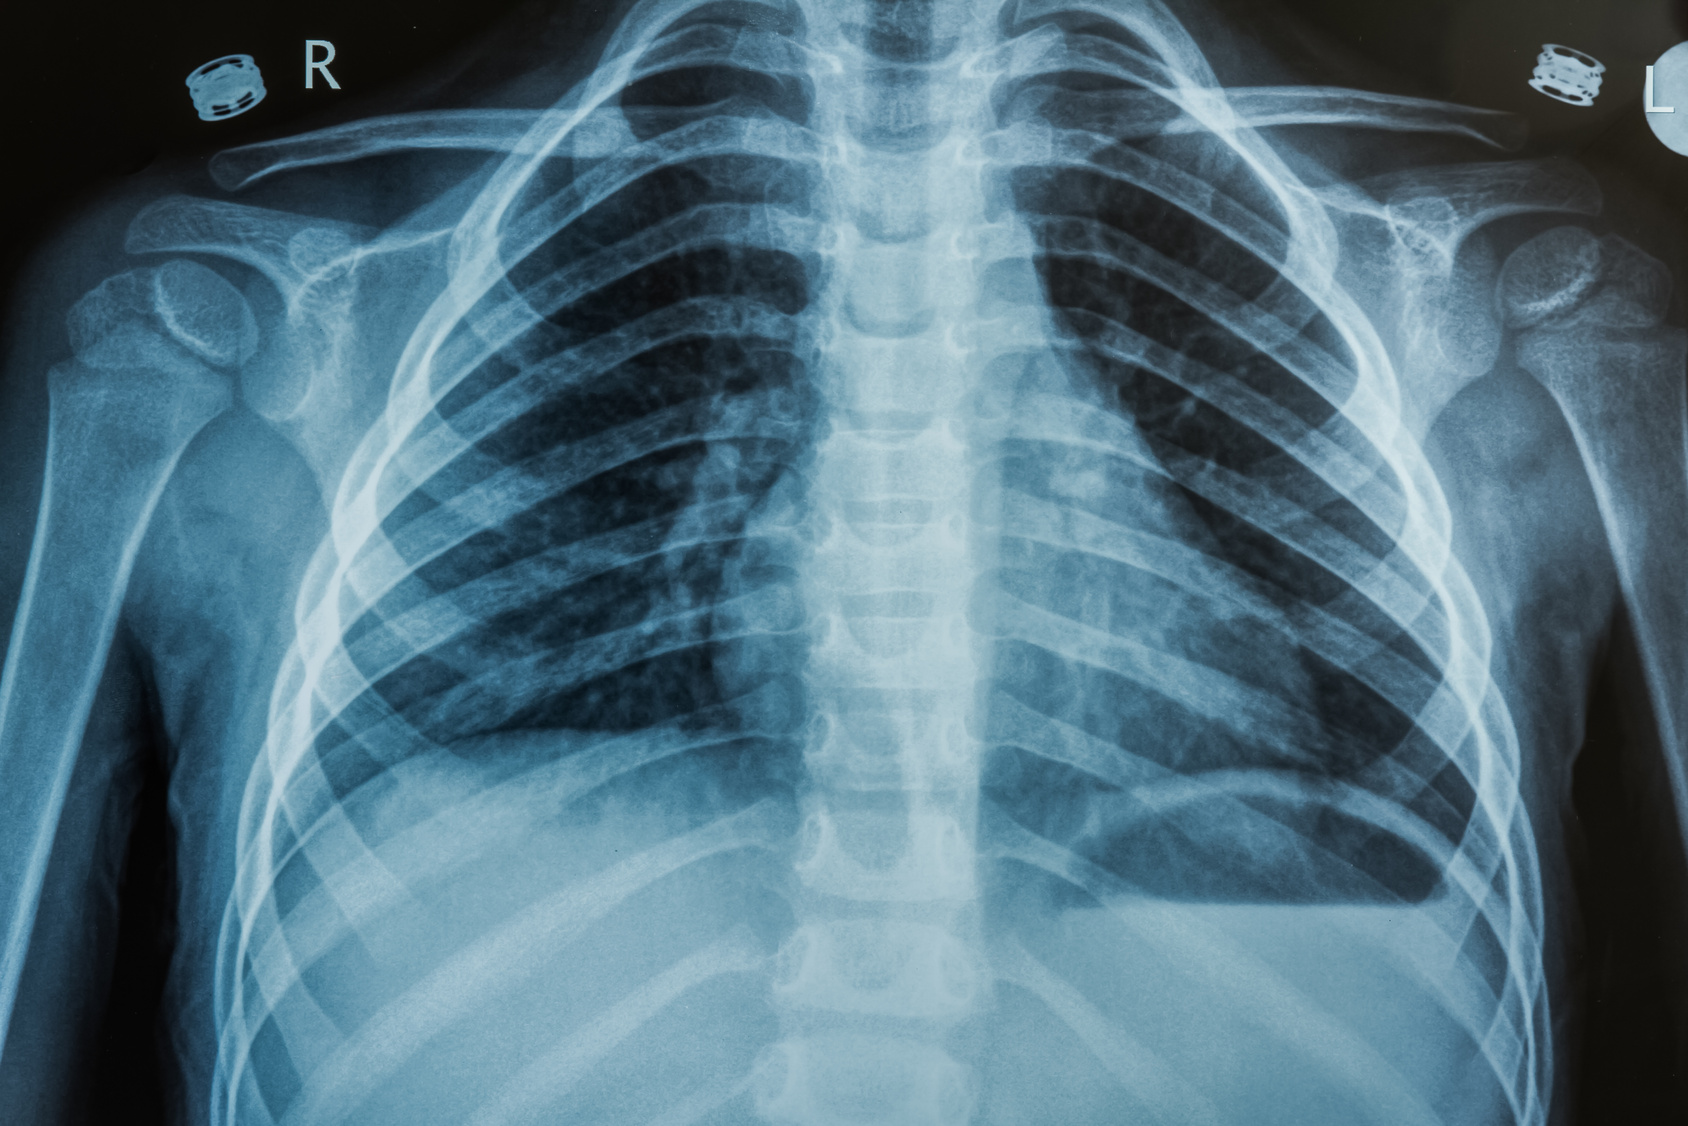 x-ray of ribs